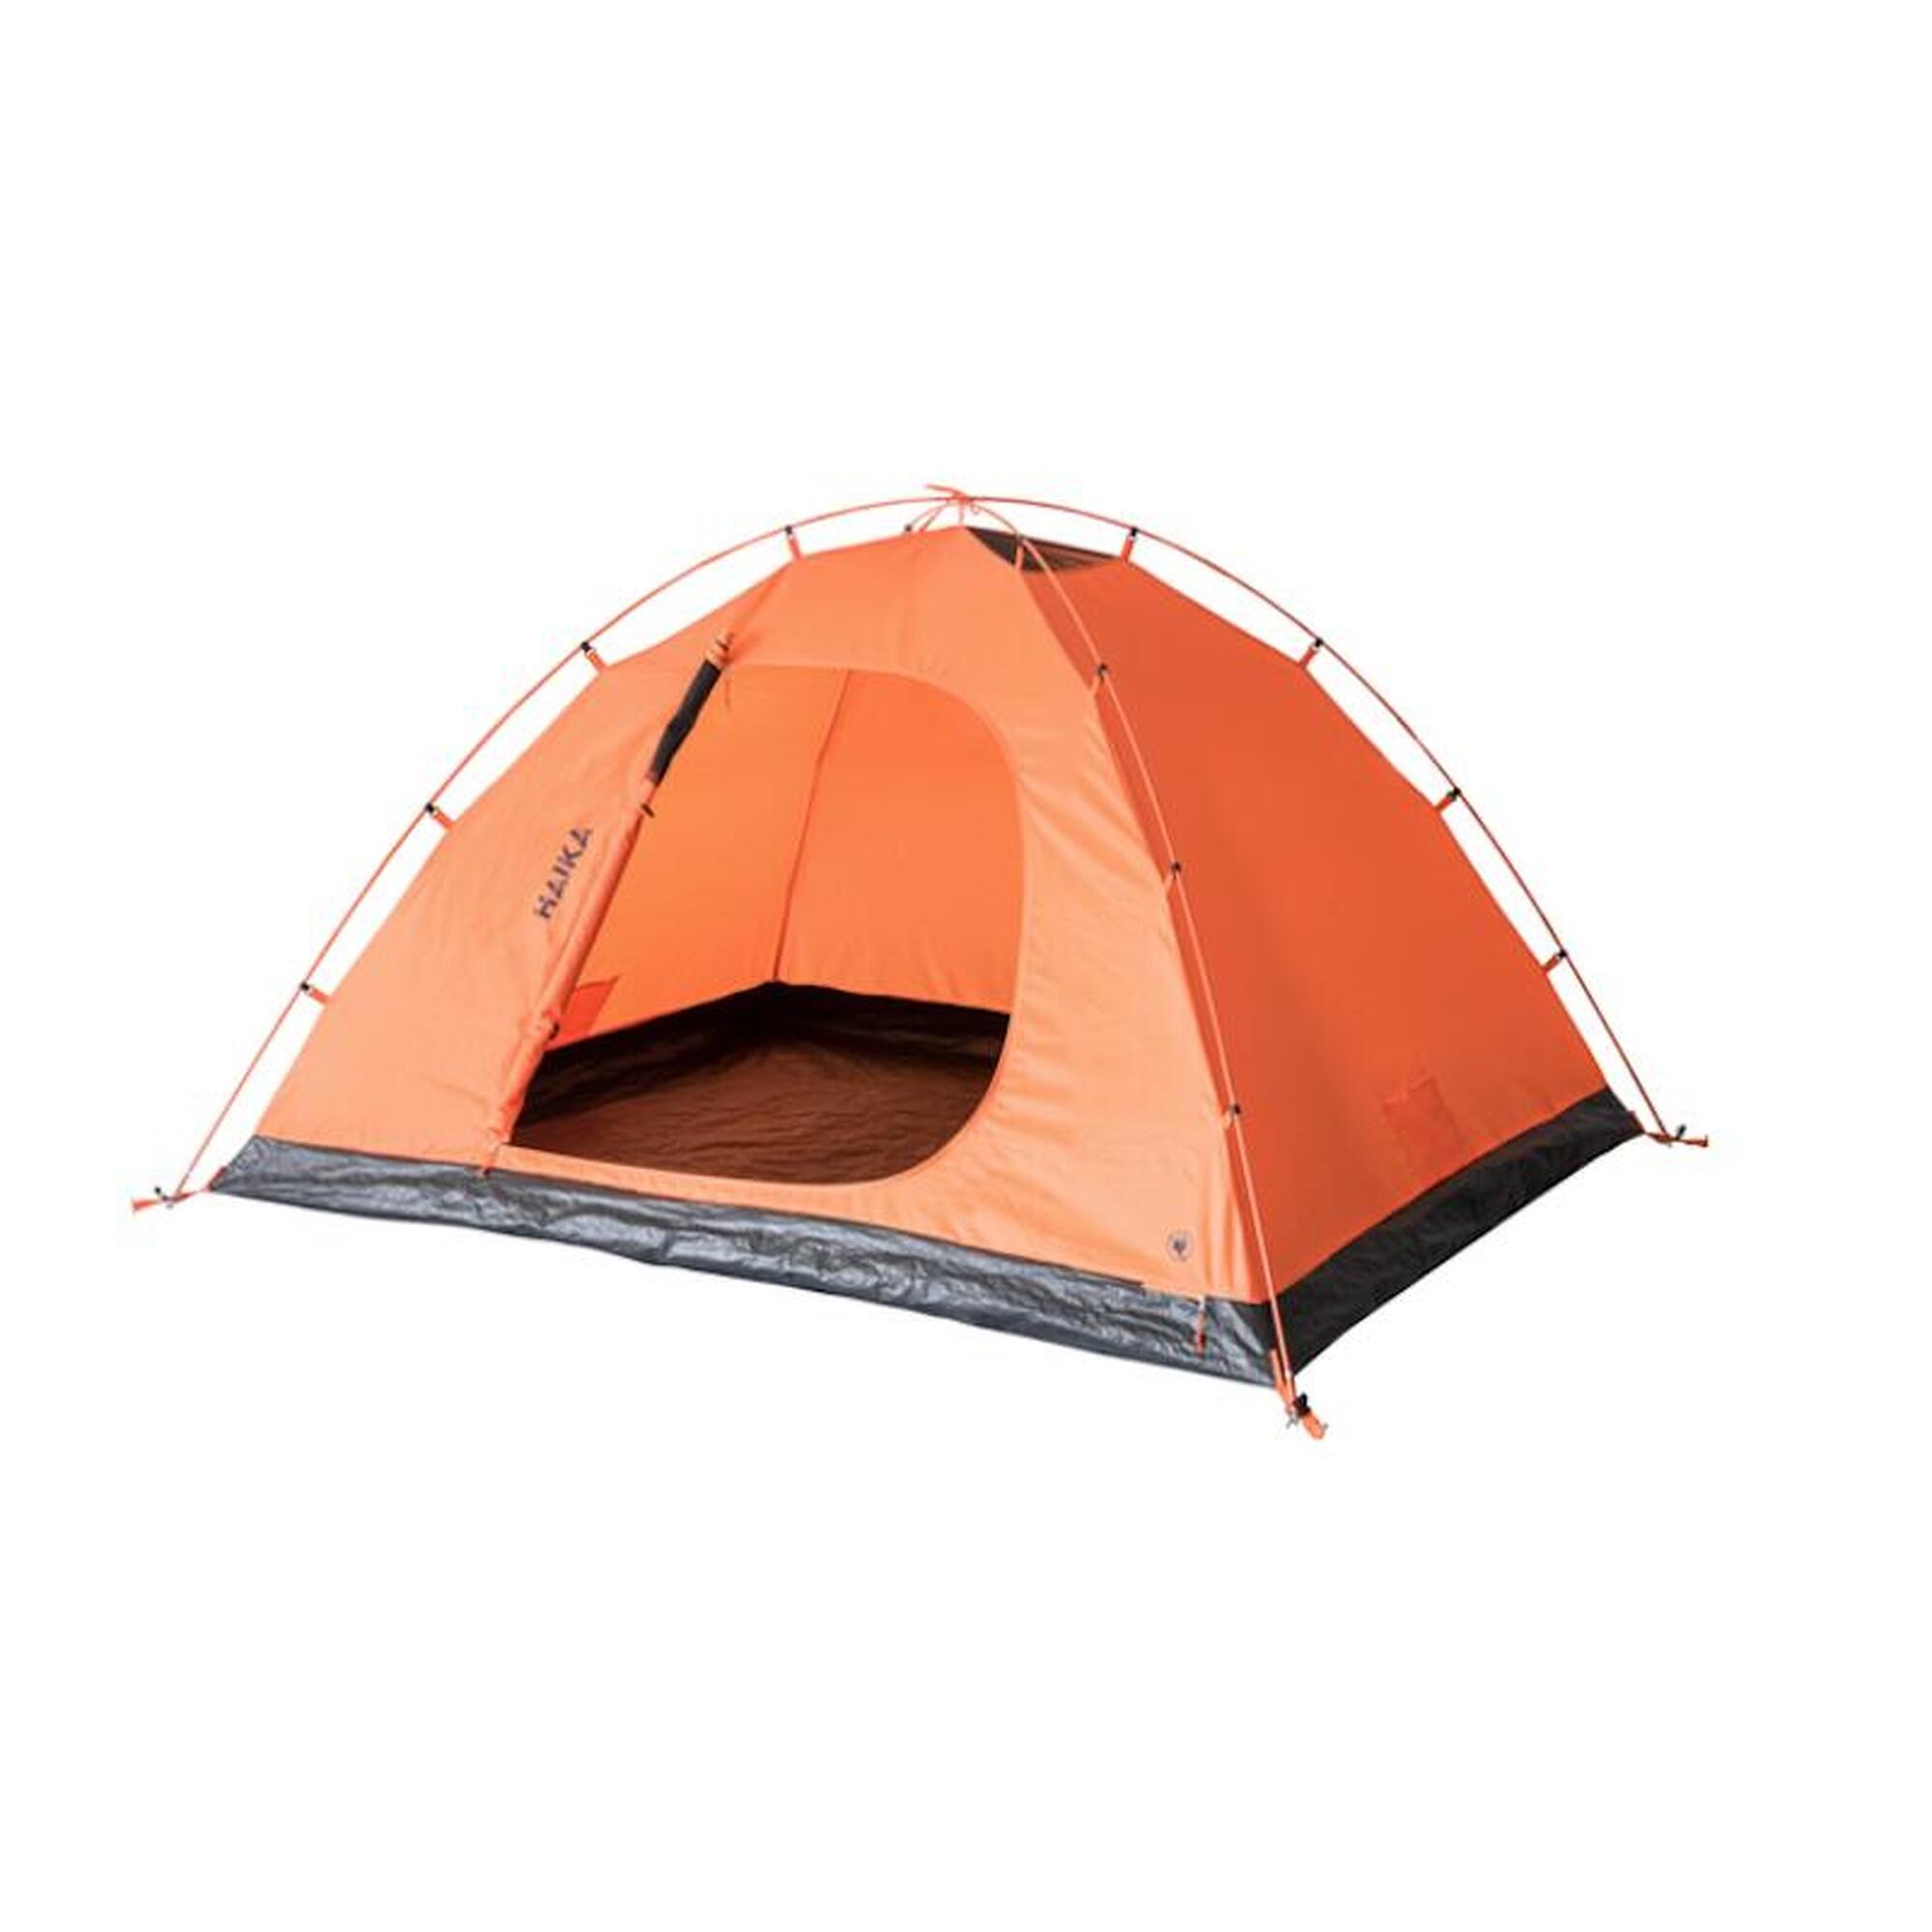 Kuppelzelt TAMBU Haika 4 Personen Camping- und Festival-Zelt Blau mit Vorbau